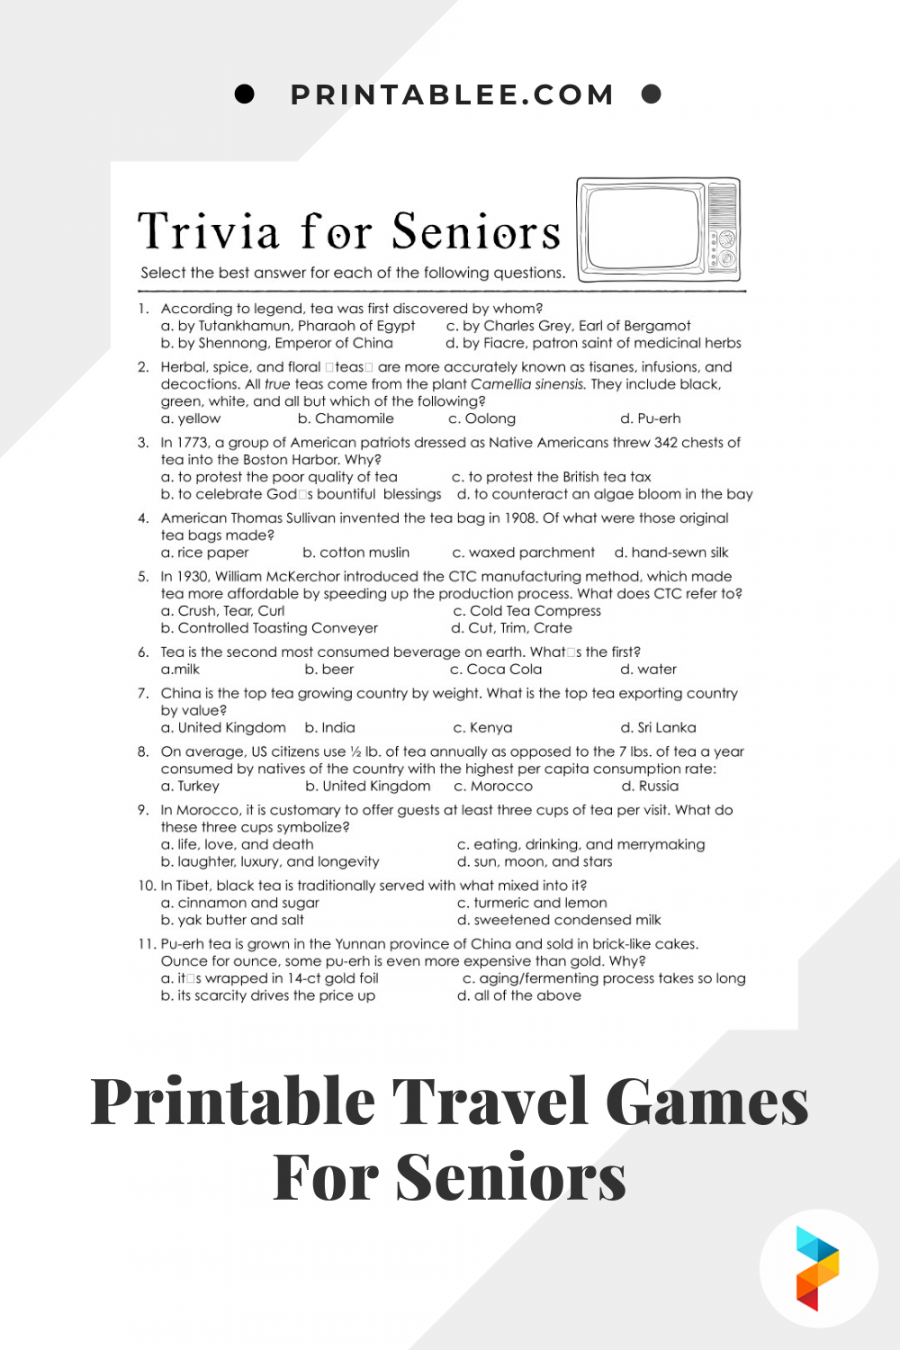 Best Printable Travel Games For Seniors - printablee